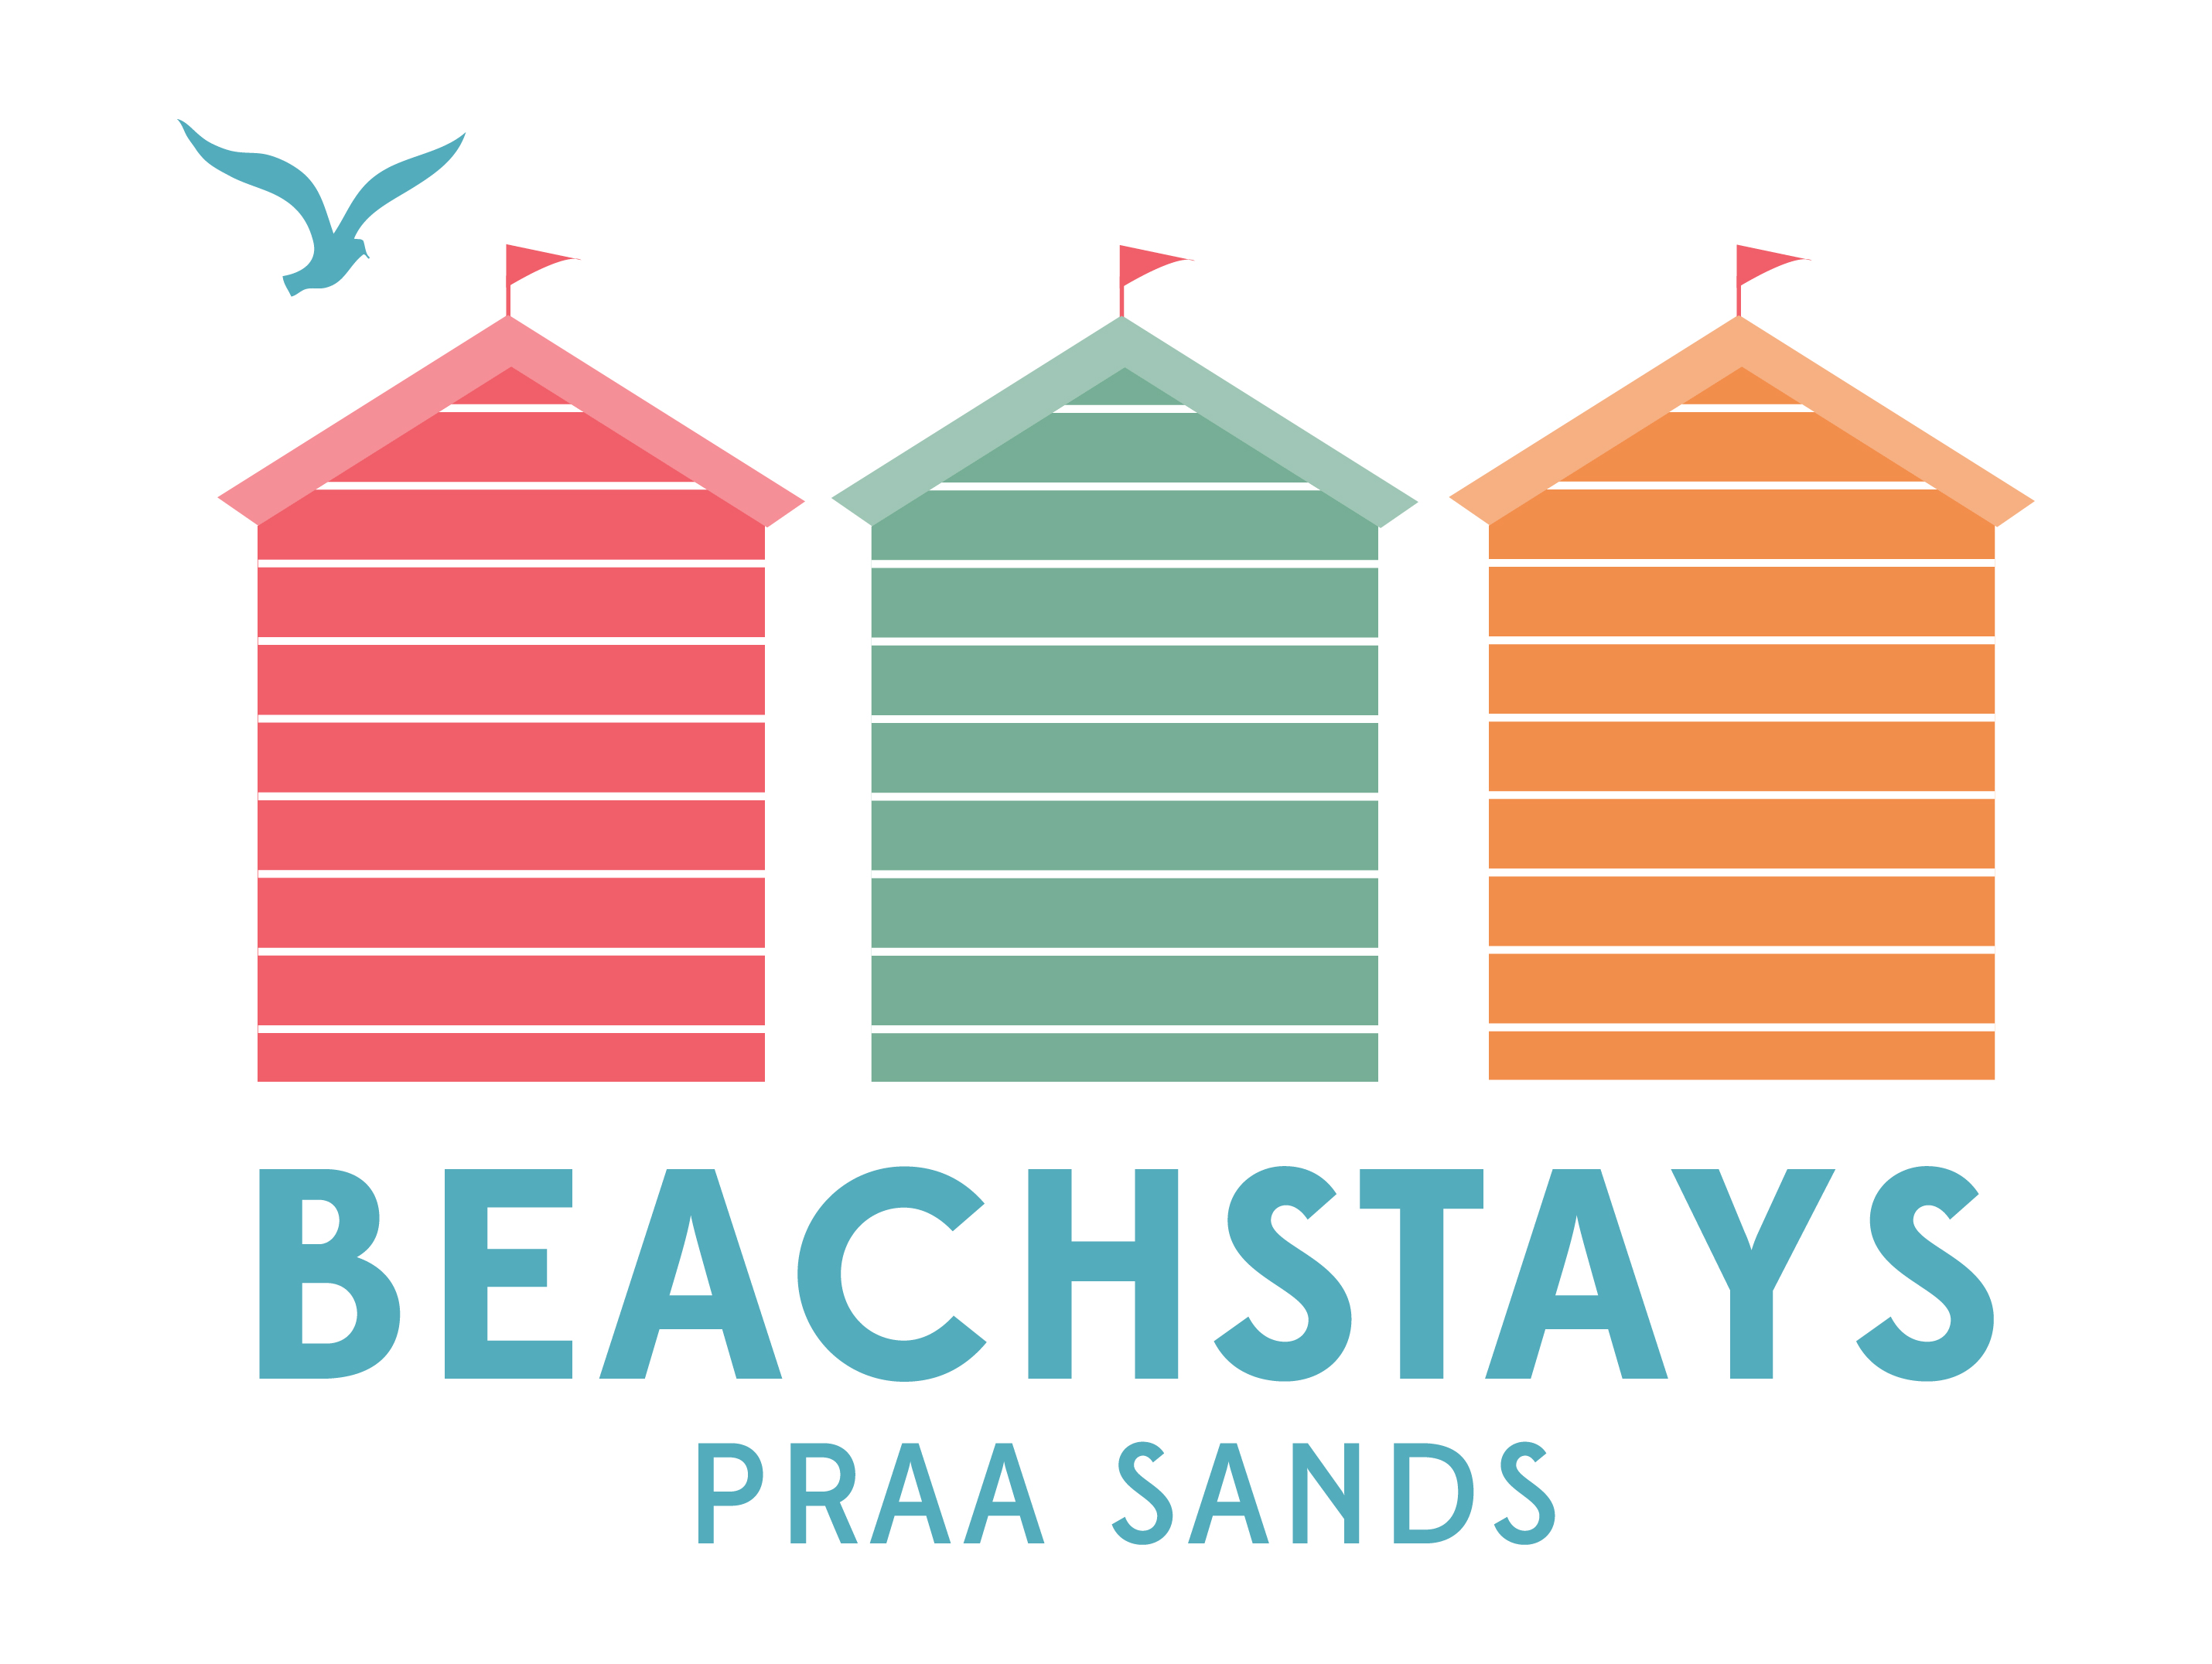 Beach Stays Praa Sands